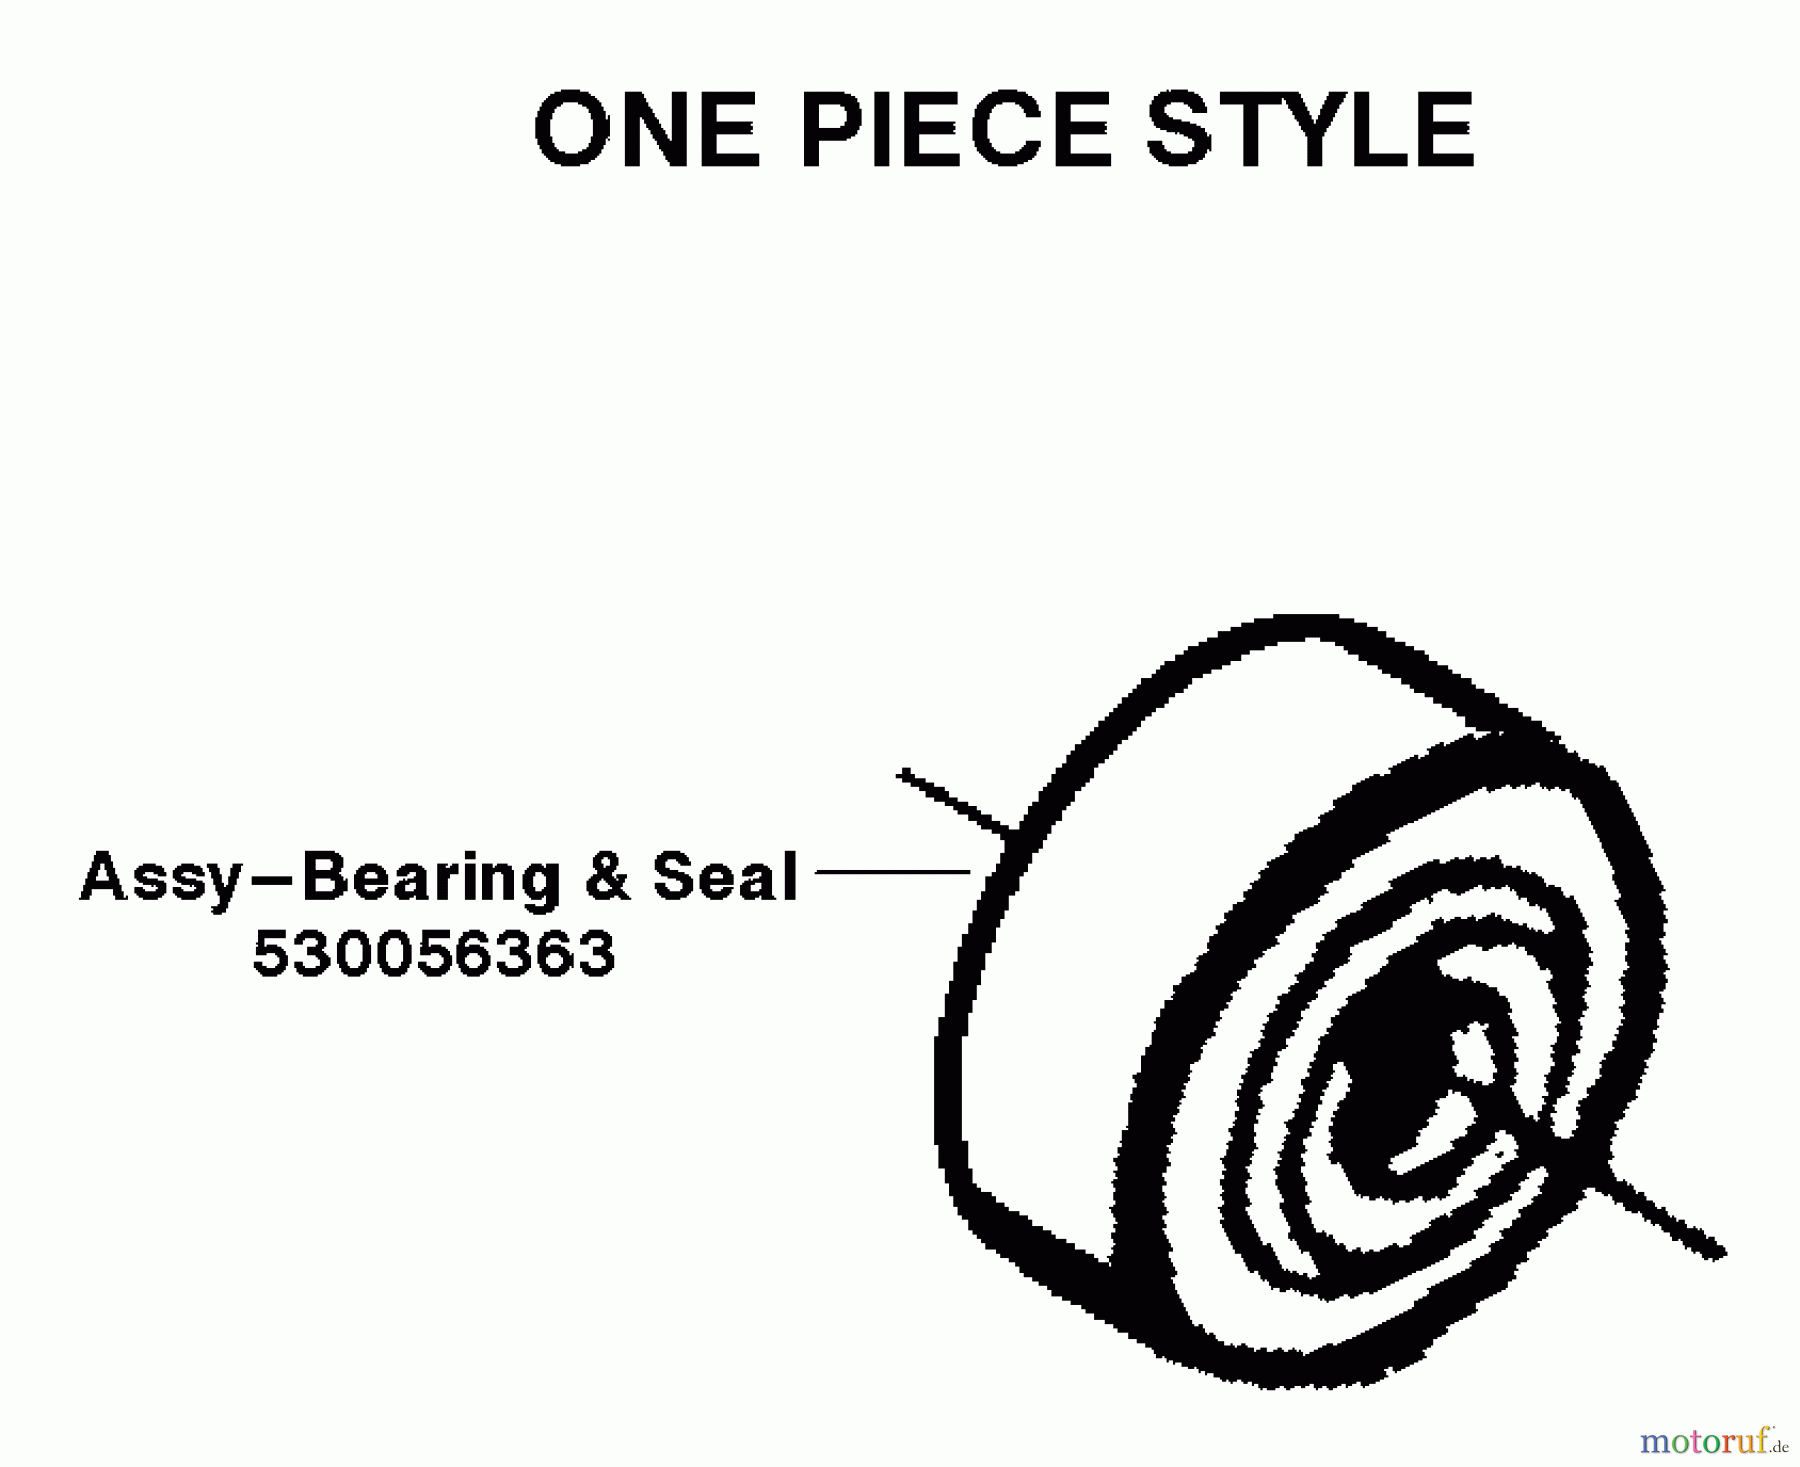  Poulan / Weed Eater Motorsägen 2900 (Type 2) - Poulan Chainsaw Bearing & Seal - One Piece Style